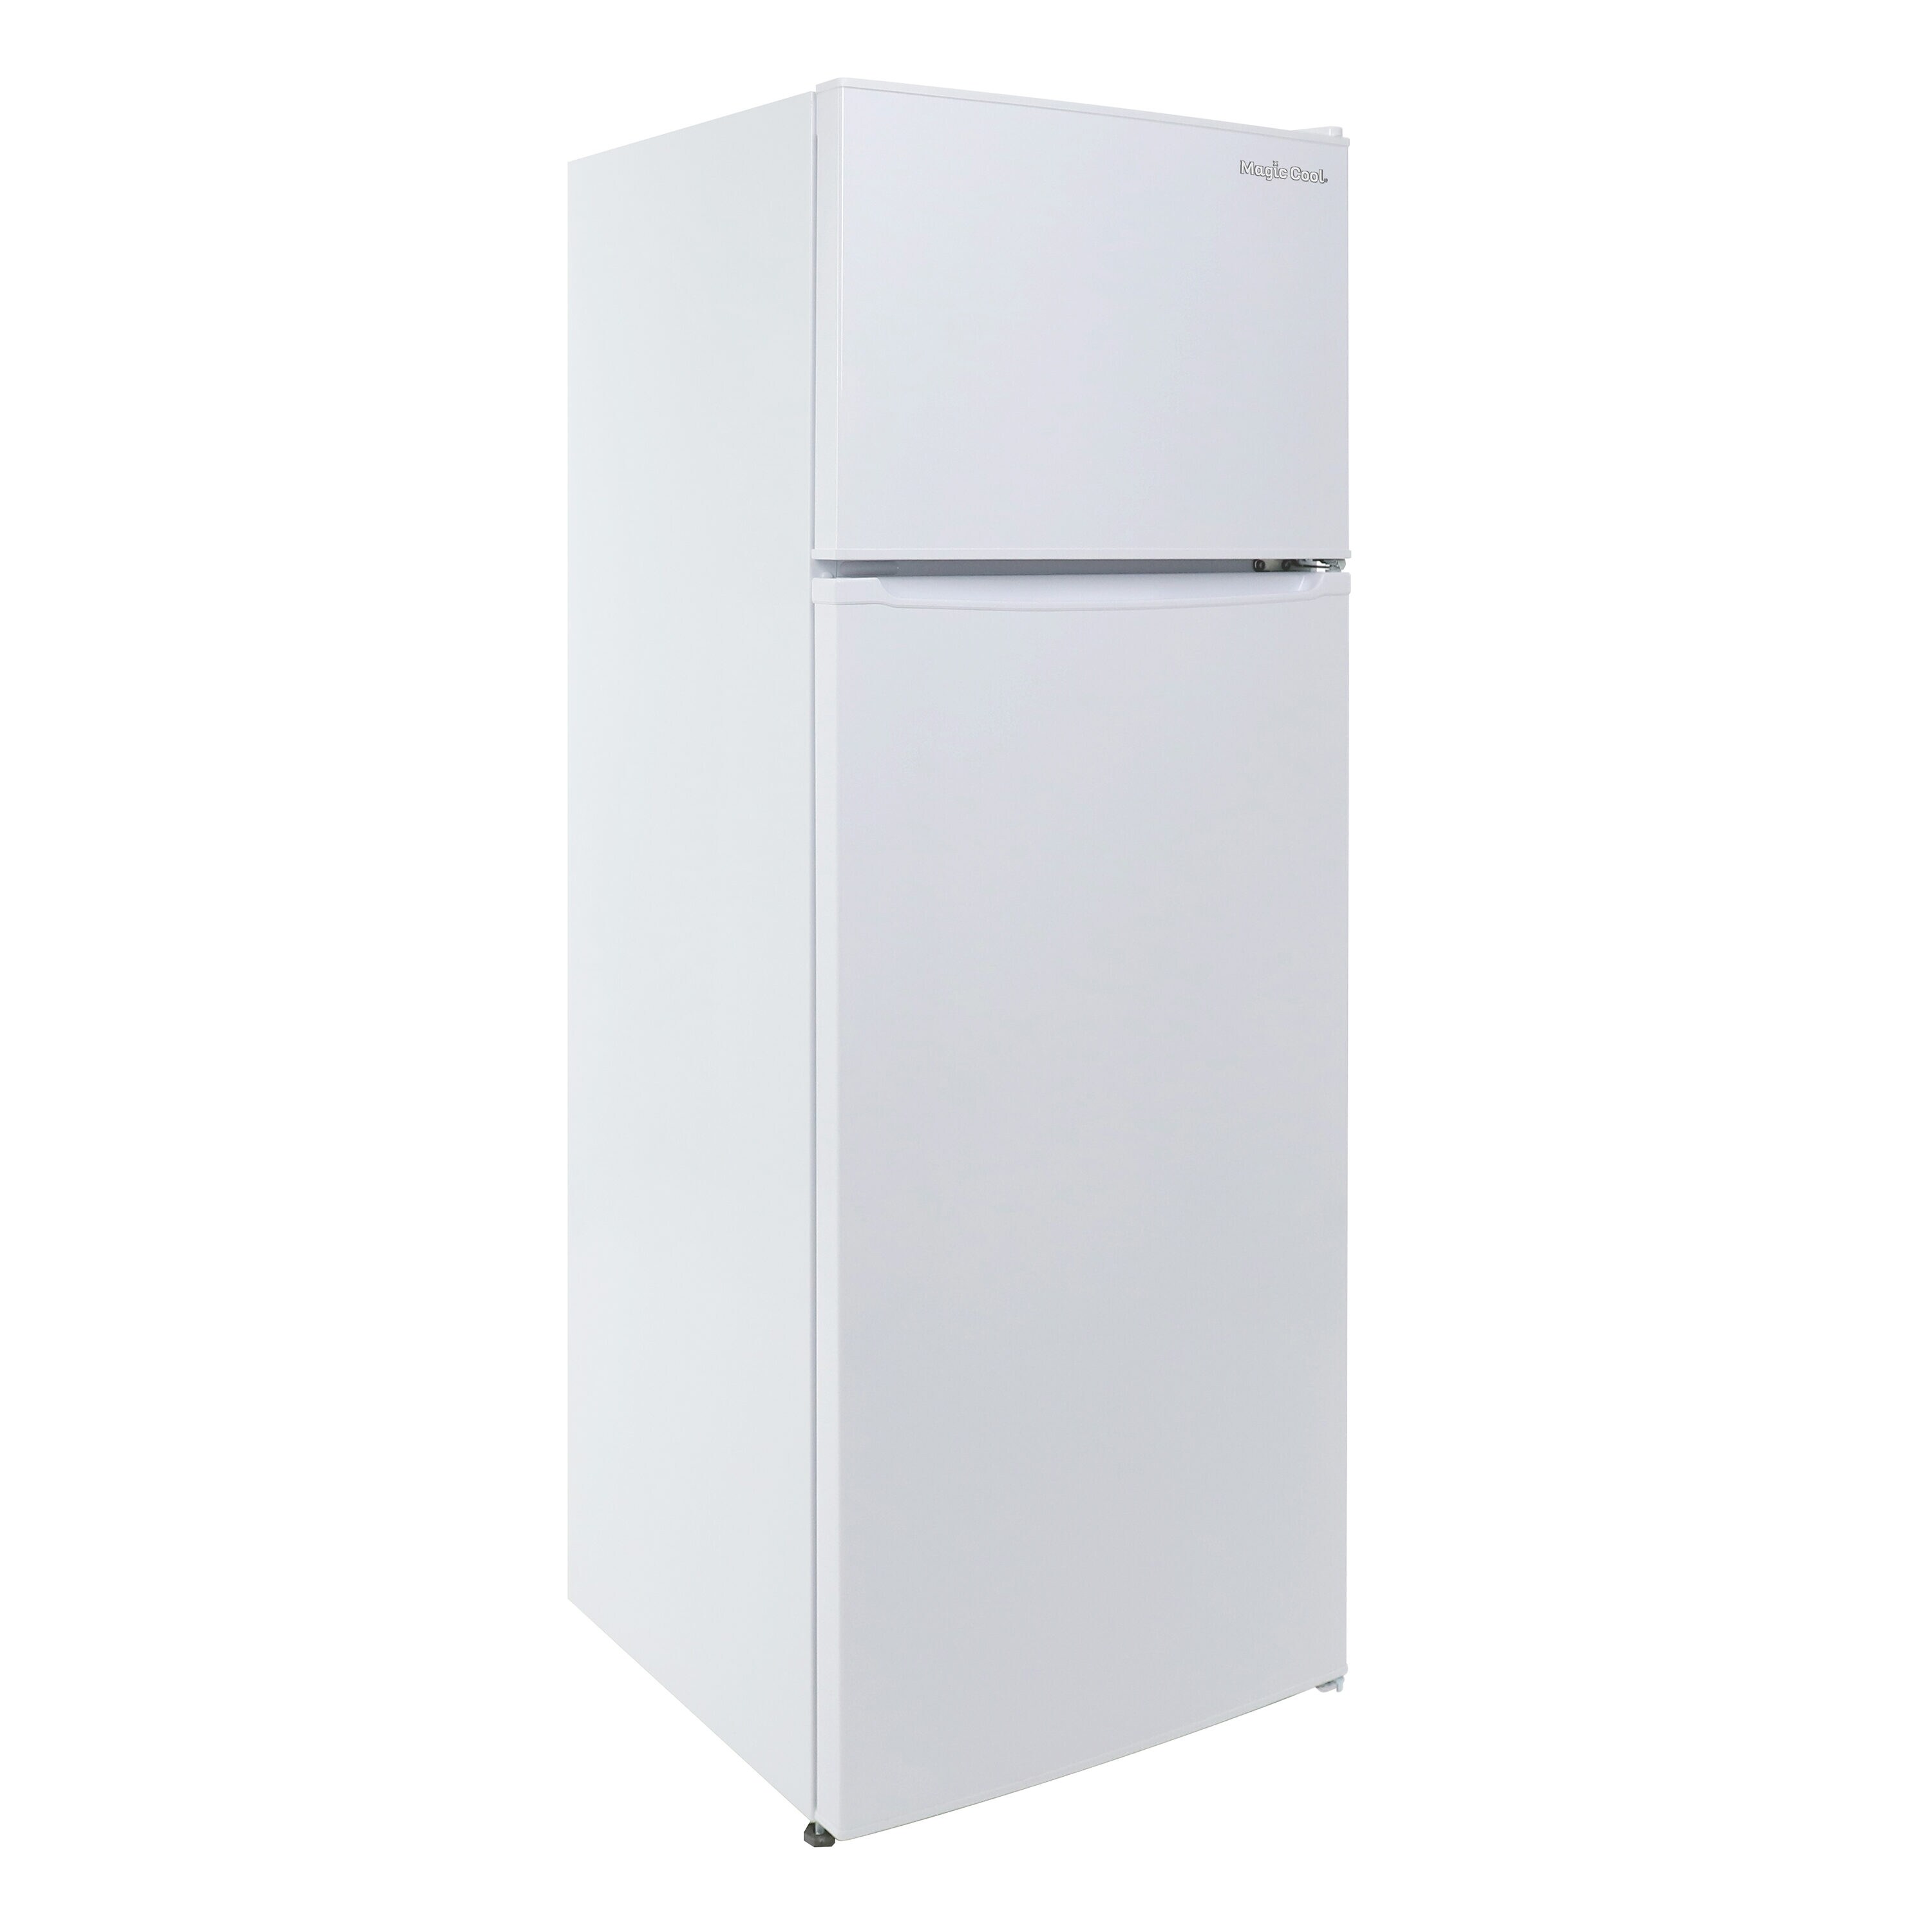 FF760W by Avanti - Model FF760W - 7.5 Cu. Ft. Frost Free Refrigerator -  White